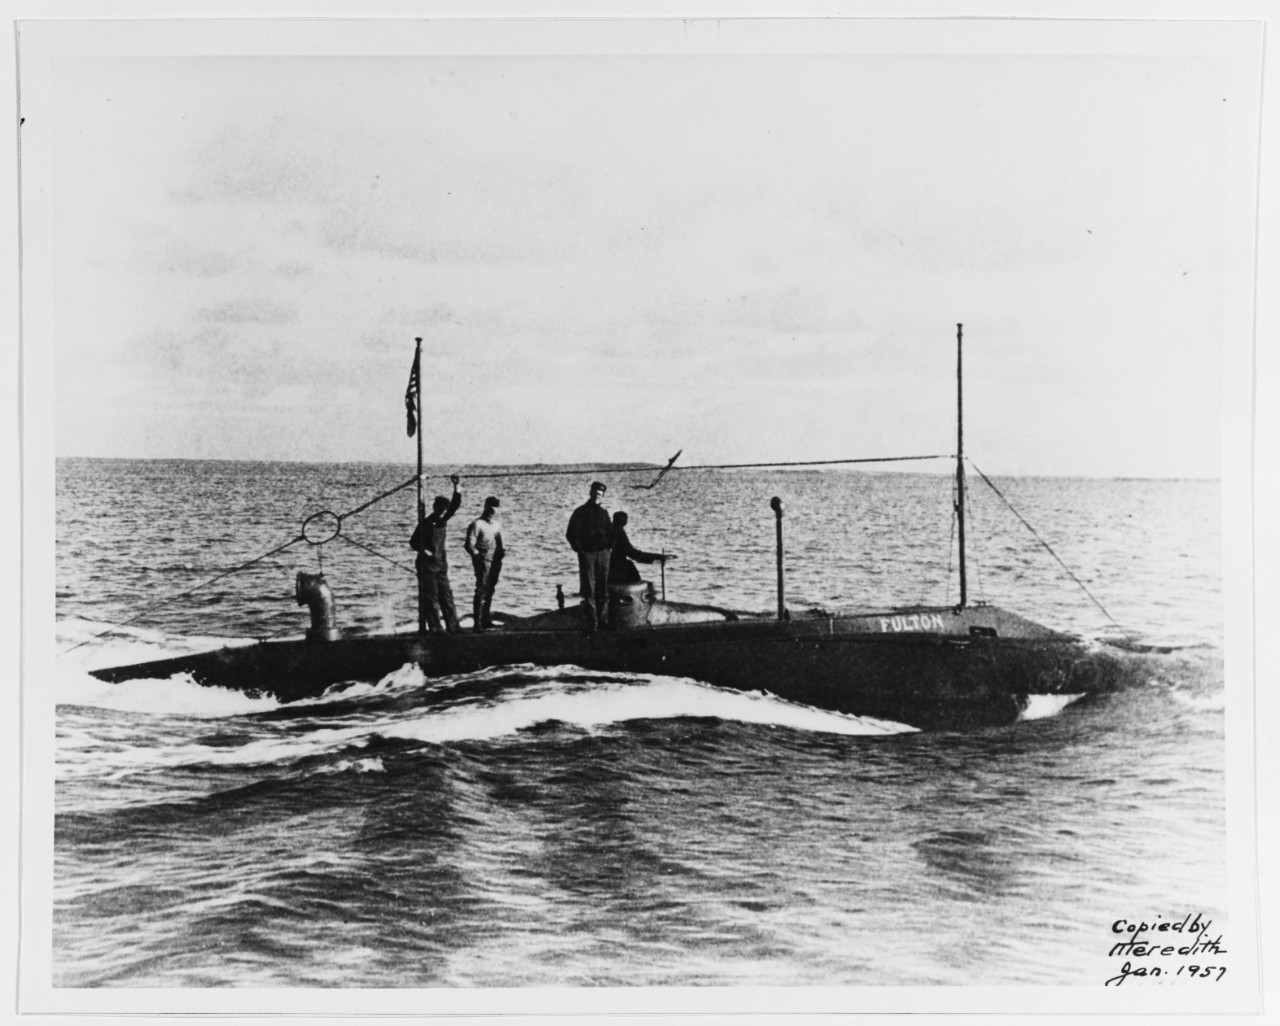 Submarine FULTON